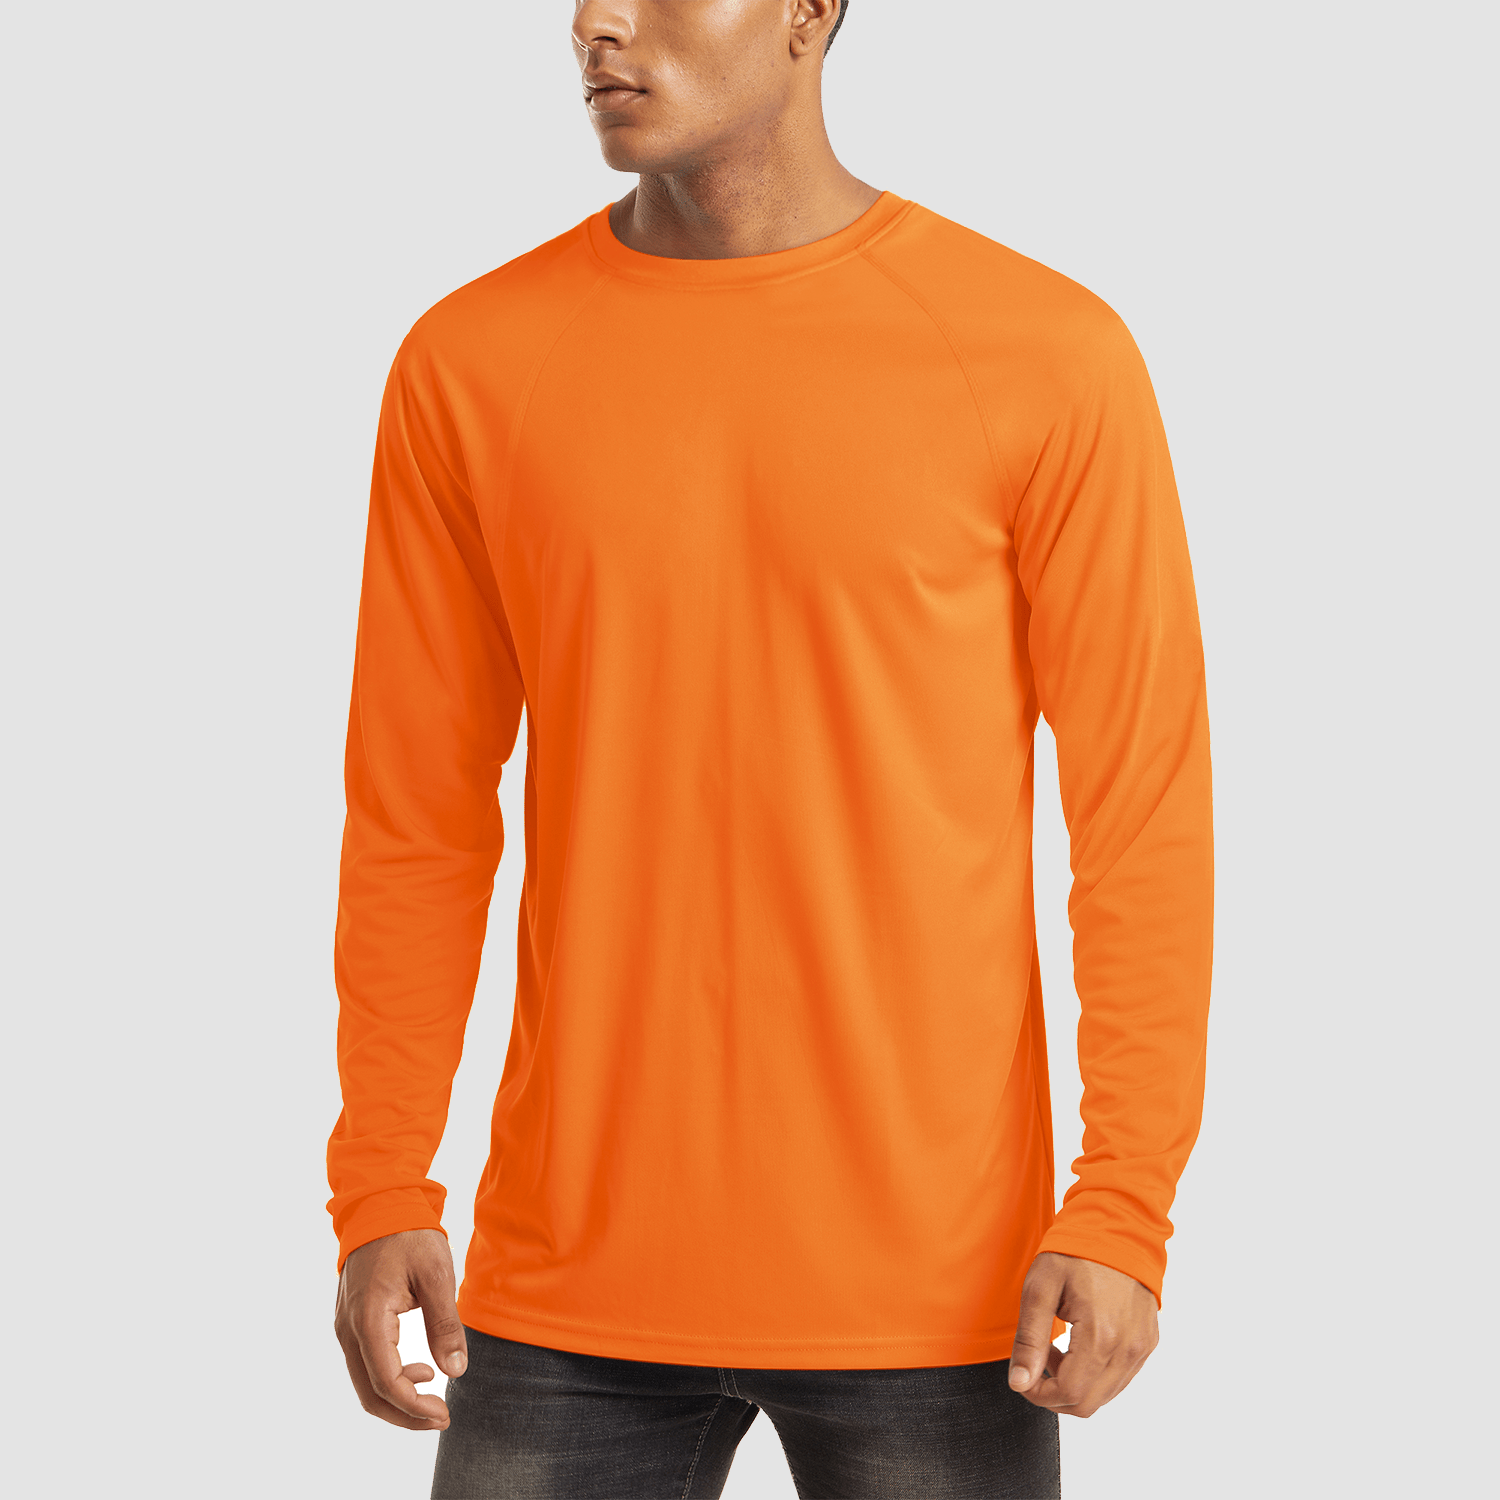 【Buy 4 Get 4th Free】Men's Long Sleeve Hooded Shirt UPF 50+ Athletic Shirt, Orange / S